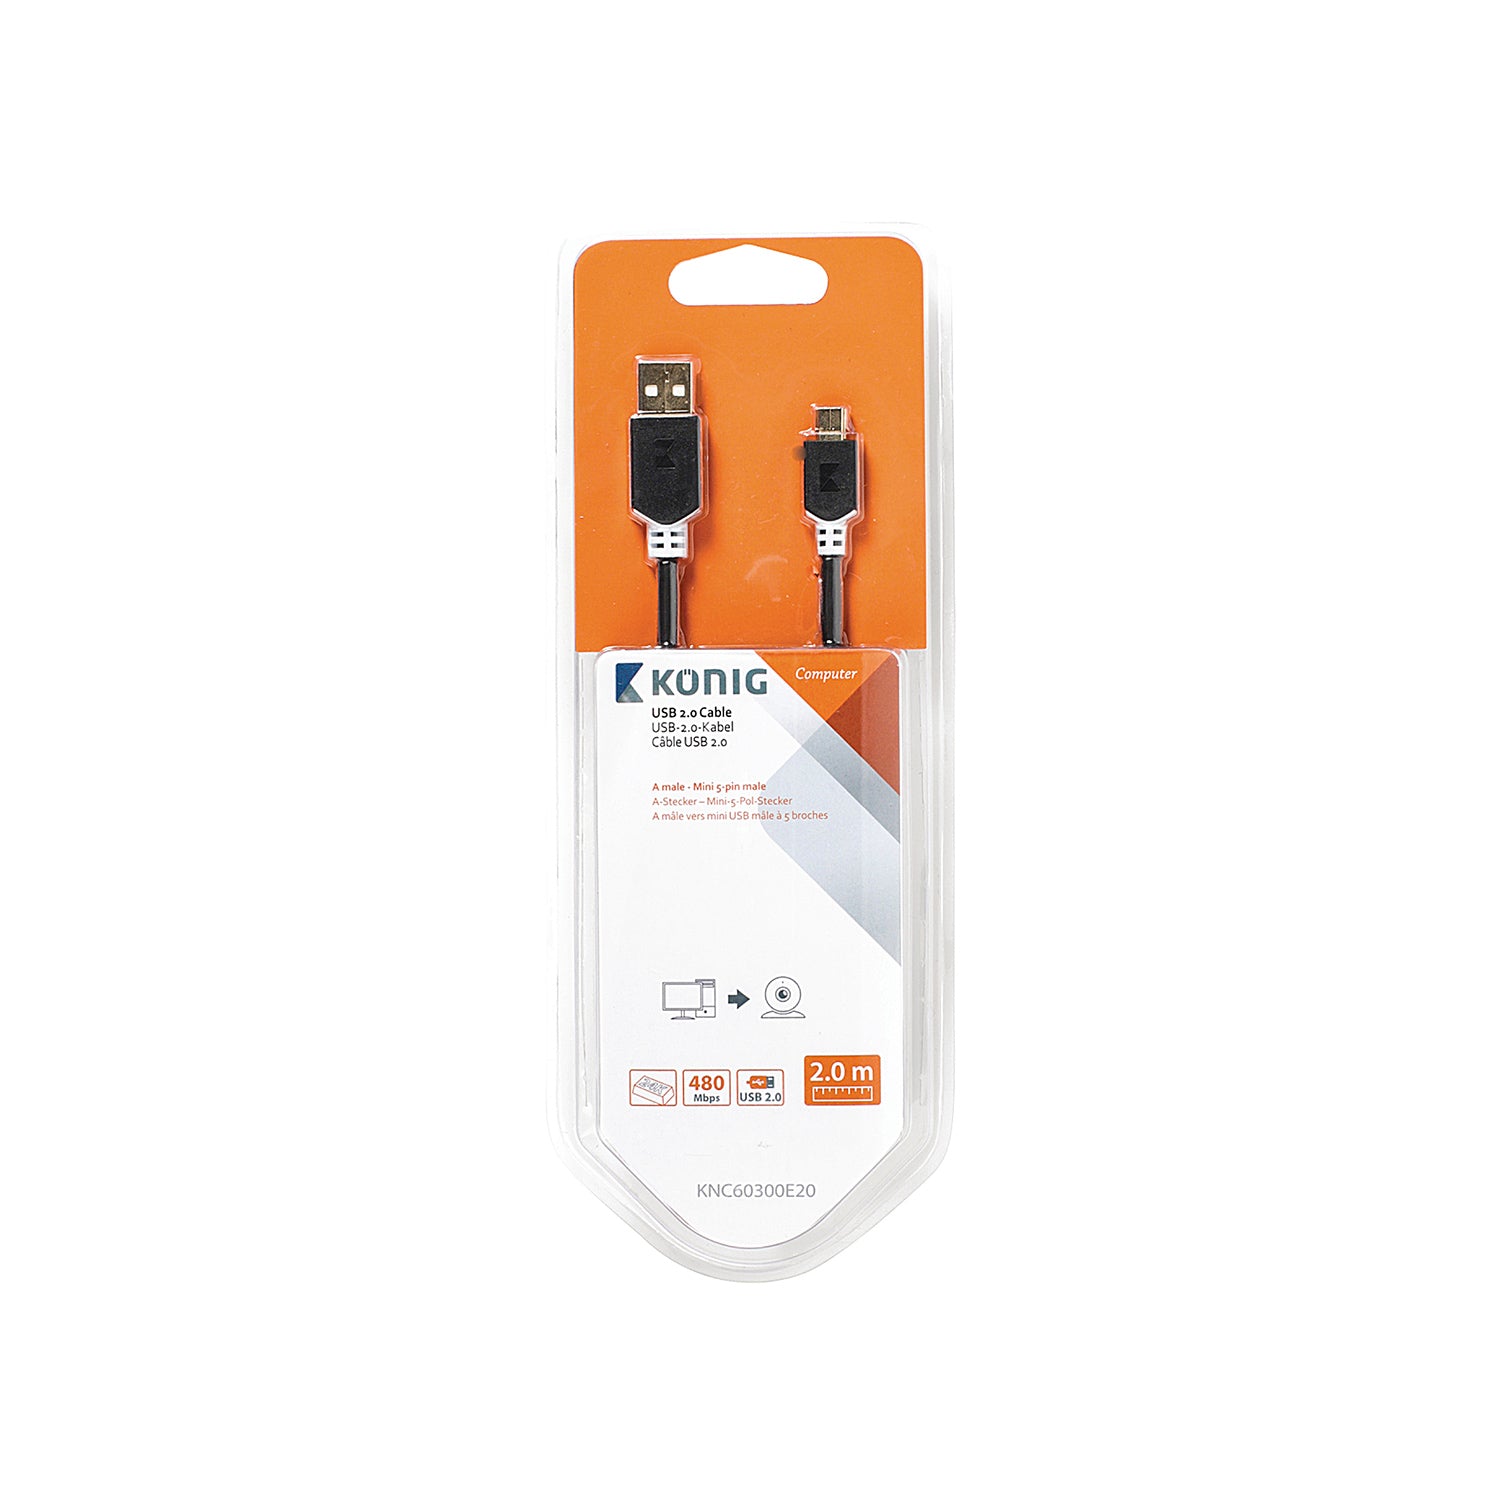 bizon nooit Internationale USB 2.0 Male To Mini Male 5 Pin Cable 2M Gray - Konig – Avilia Home